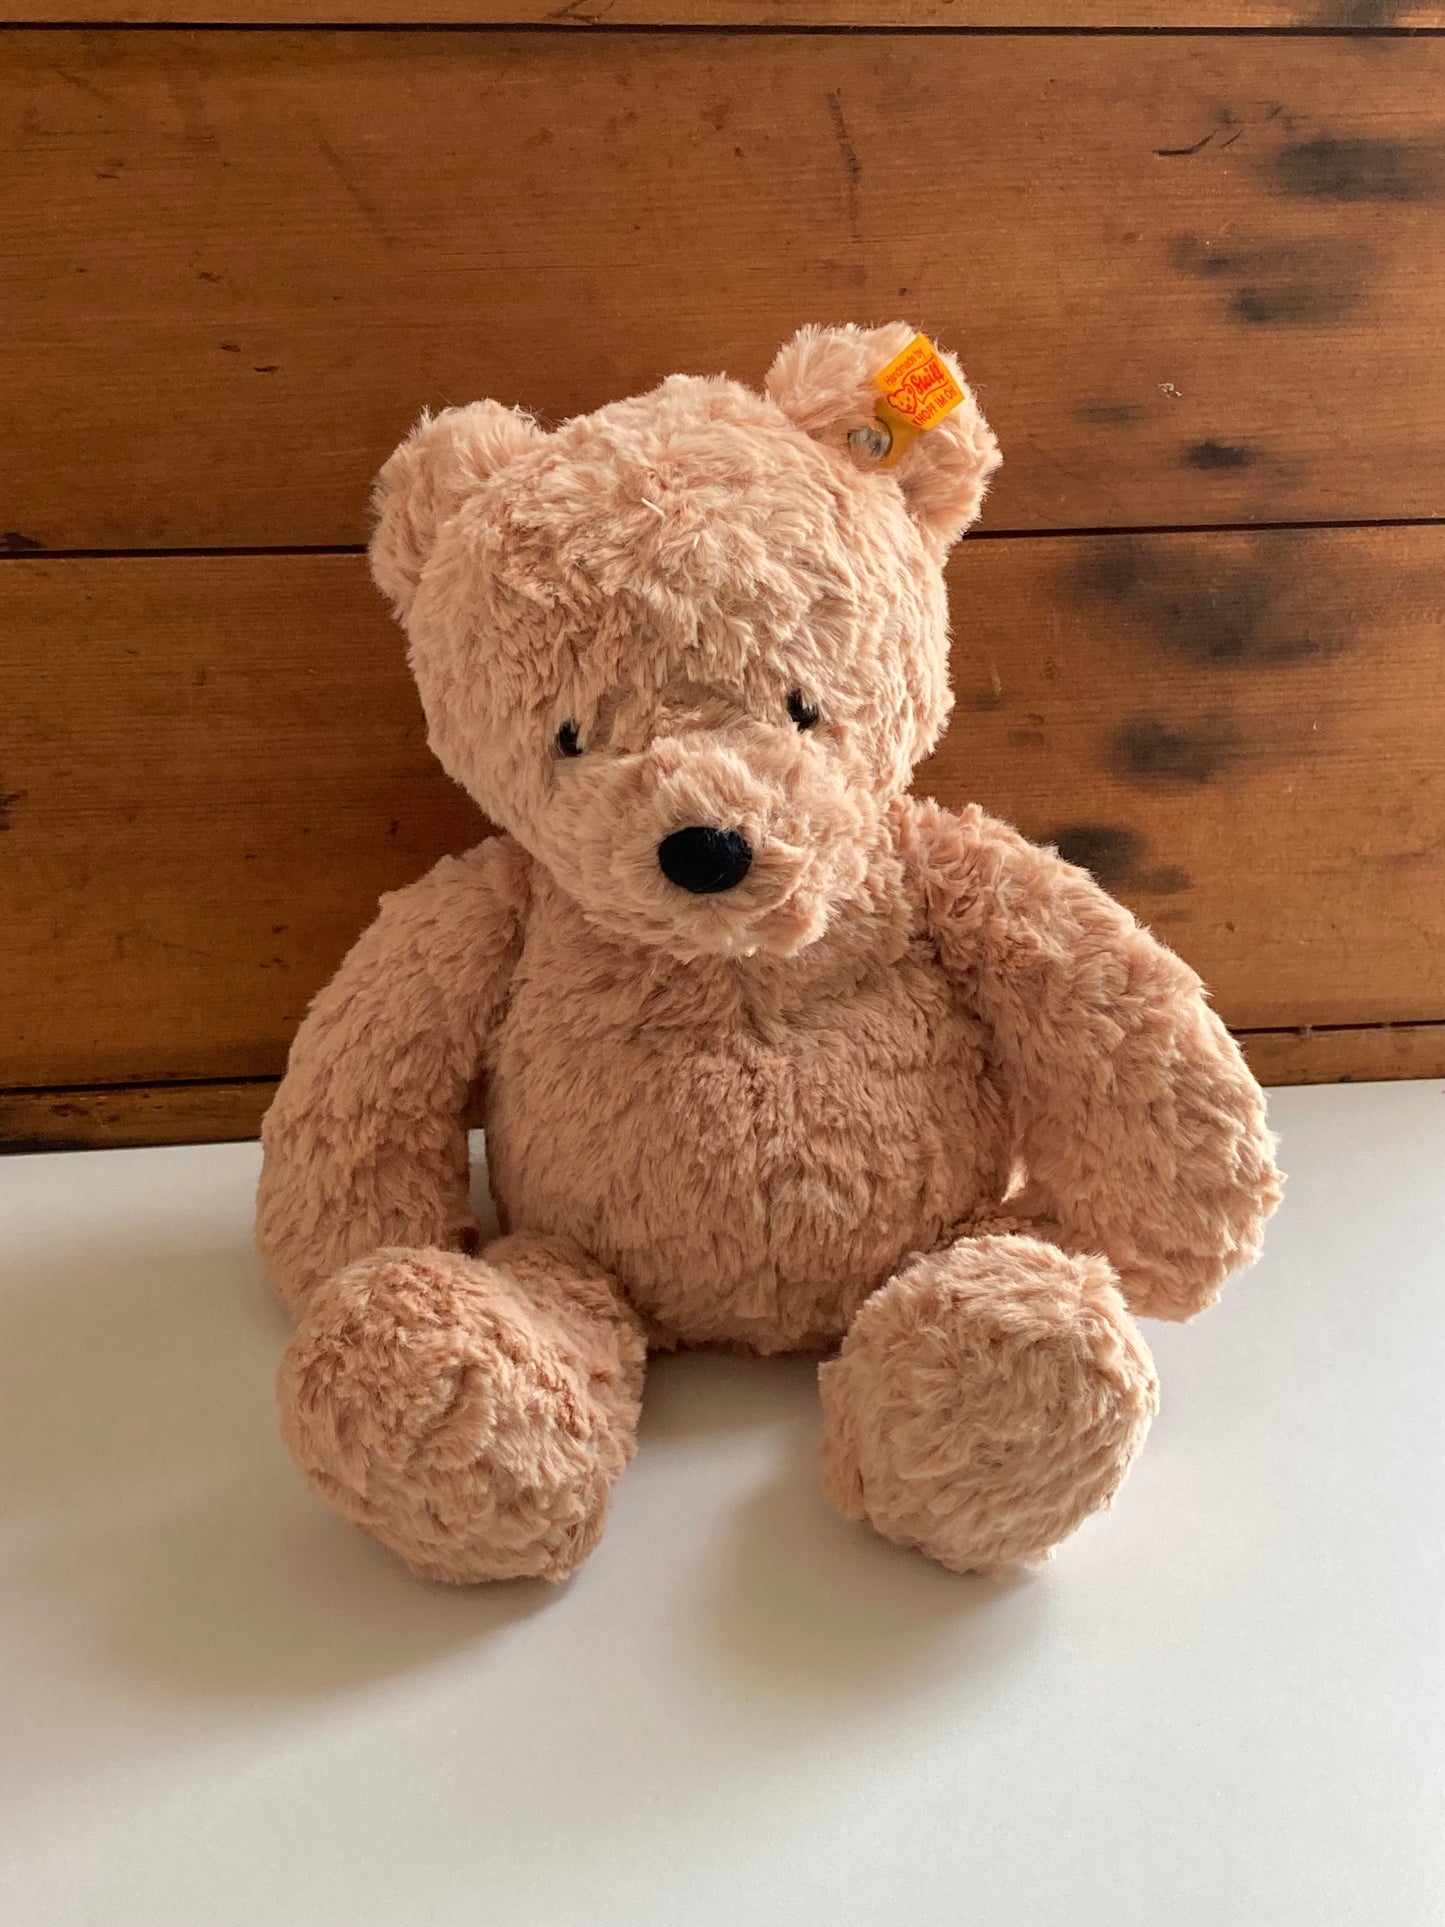 Soft Stuffed Animal for Baby - Steiff TEDDY BEAR